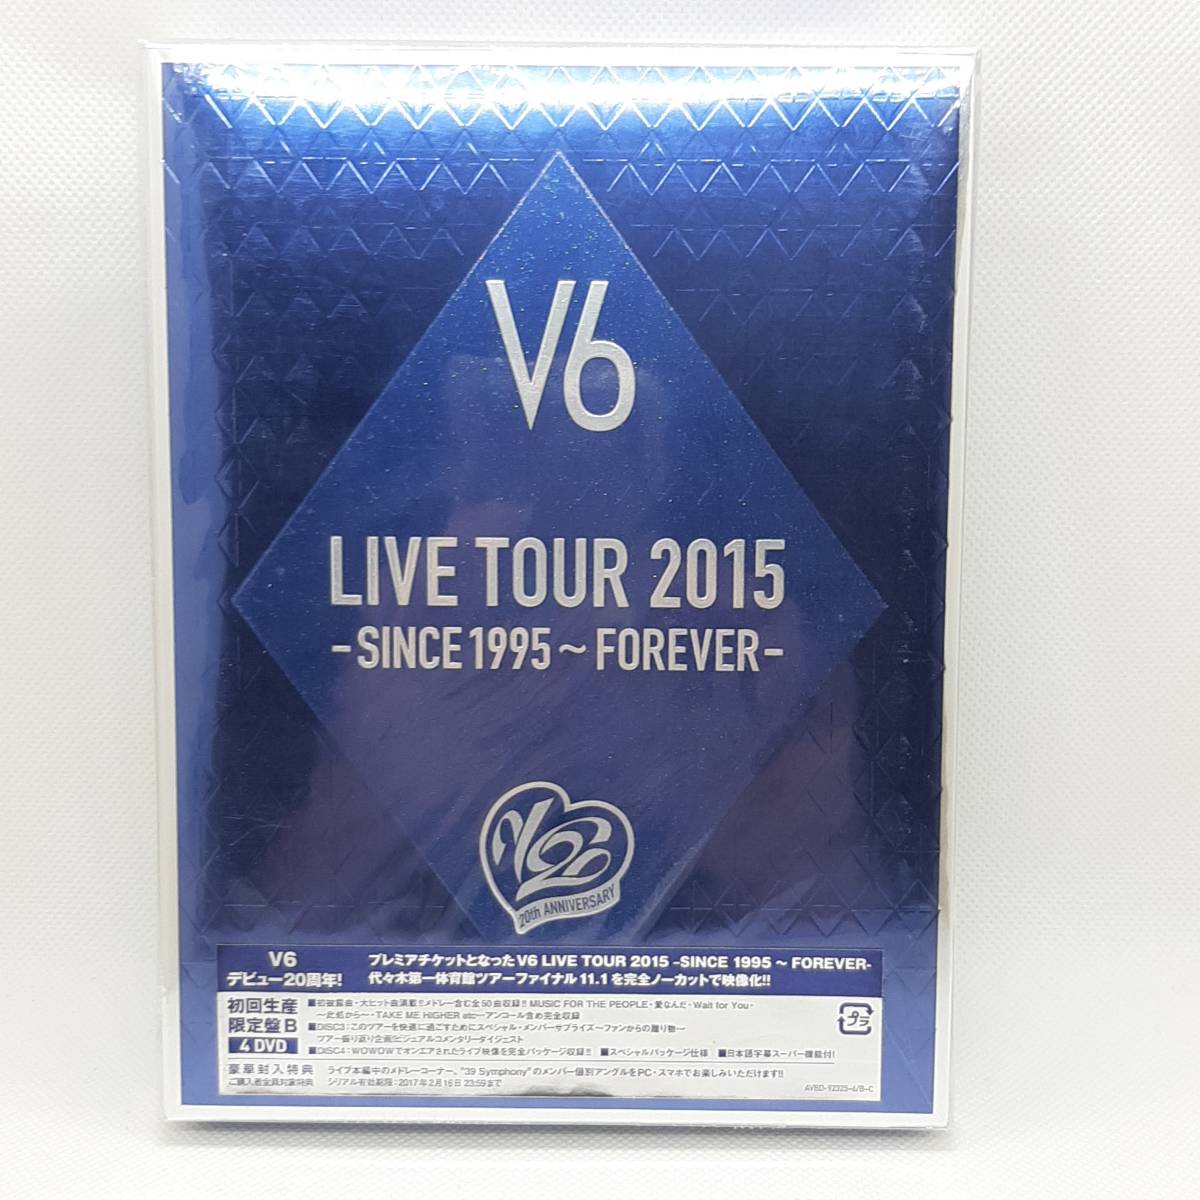 V6 SPACE -from V6 Live Tour'98- DVD forsci.com.br